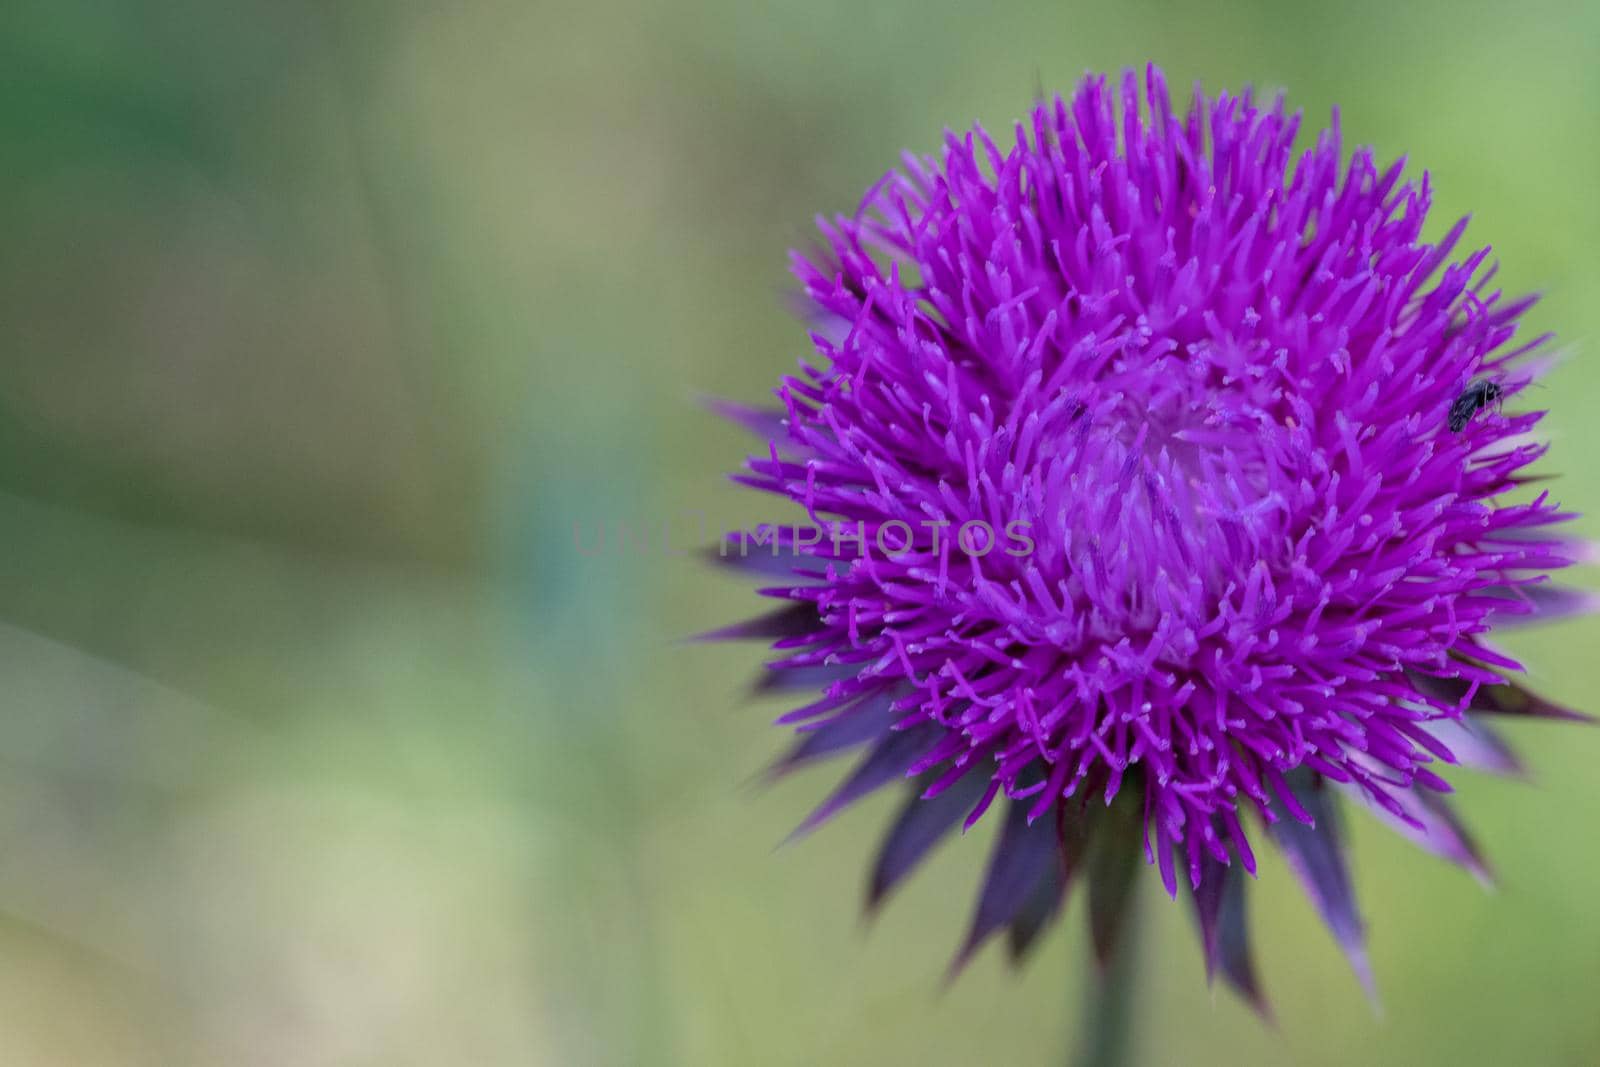 Scottish Flower Symbolic, Purple thistle close up in Nebraska landscape by gena_wells